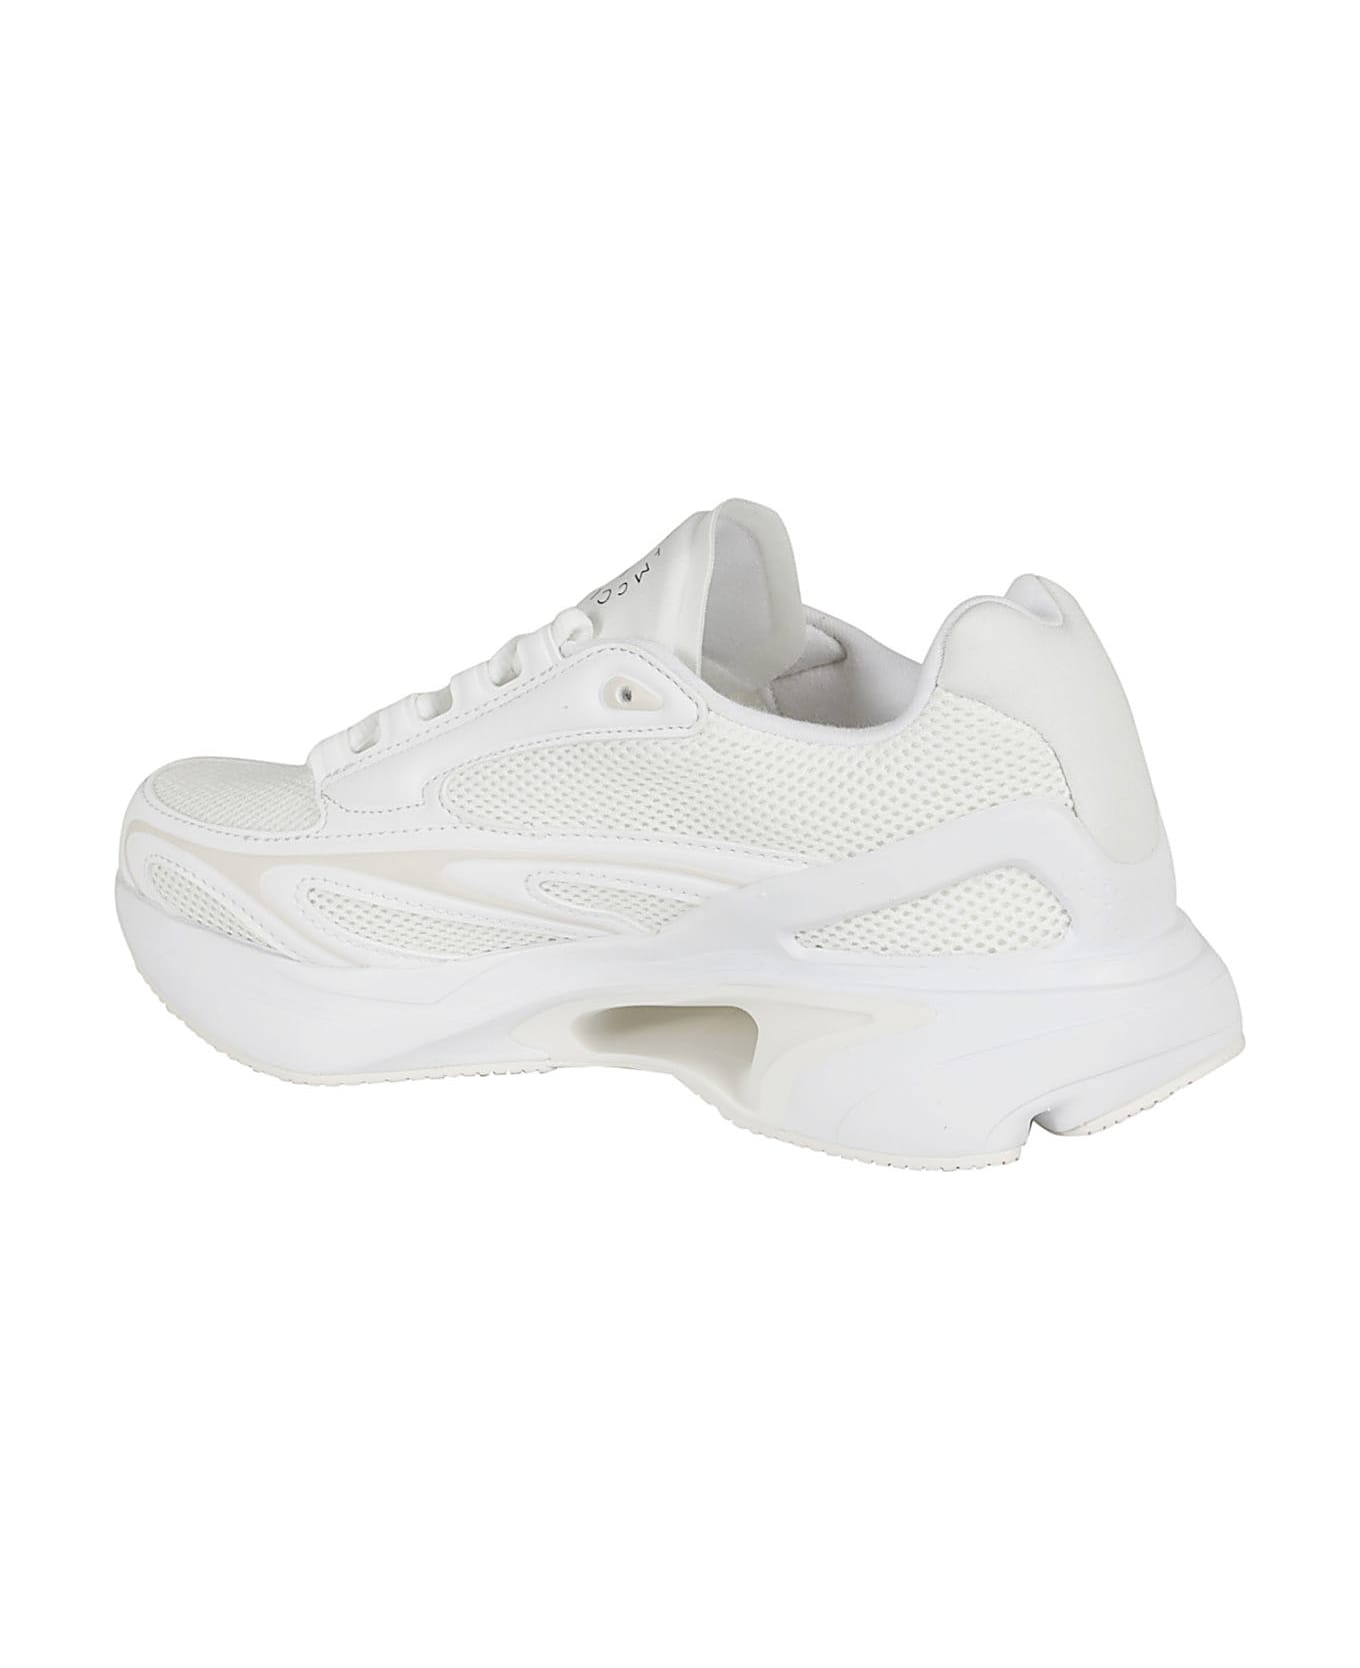 Adidas by Stella McCartney Sports Wear - White